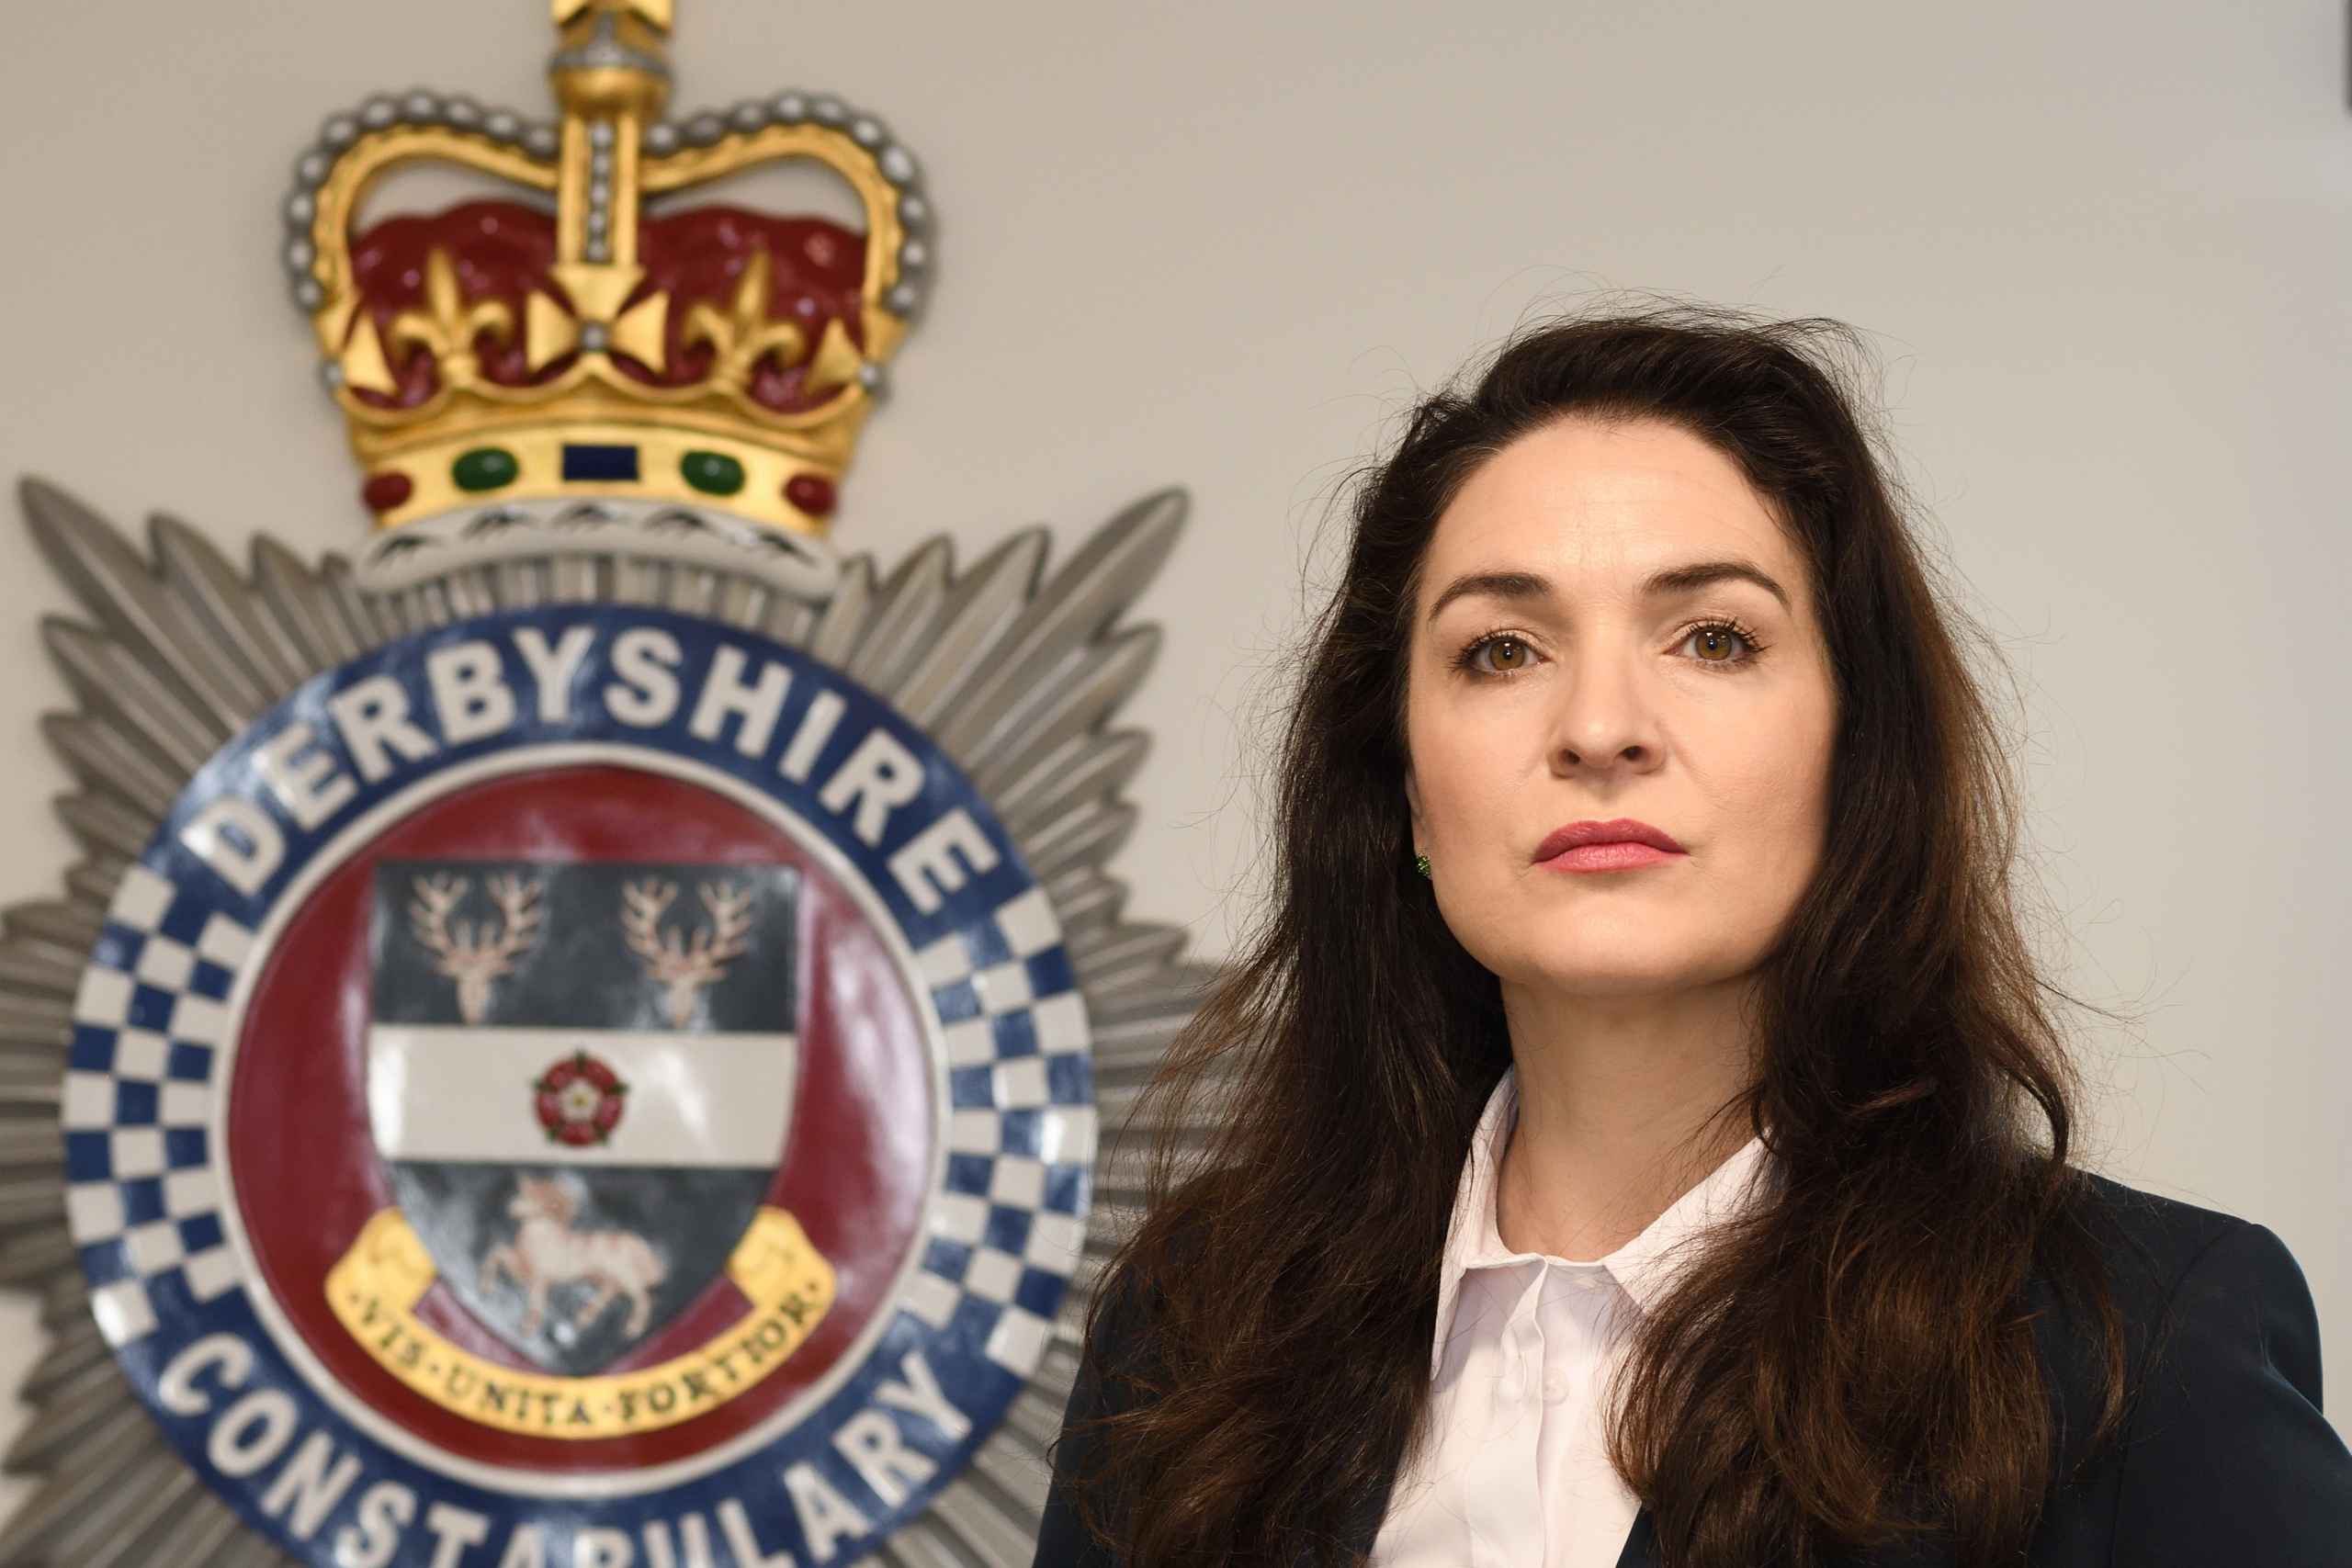 Commissioner in front of Derbyshire Police Crest